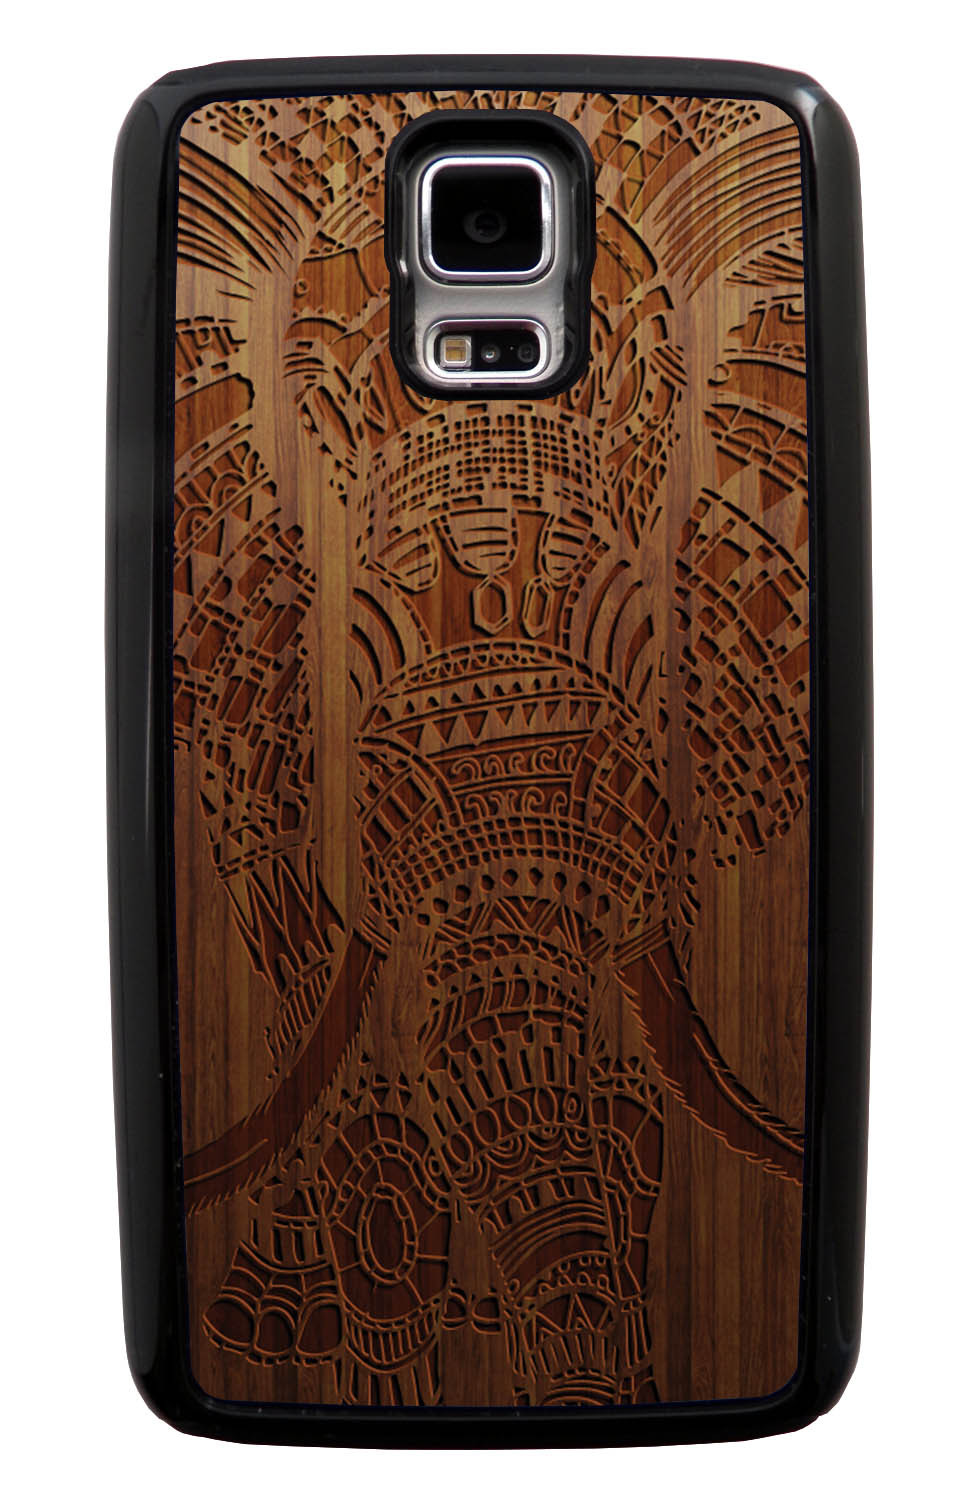 Samsung Galaxy S5 / SV Aztec Case - Simulated Oak Wood Engraving